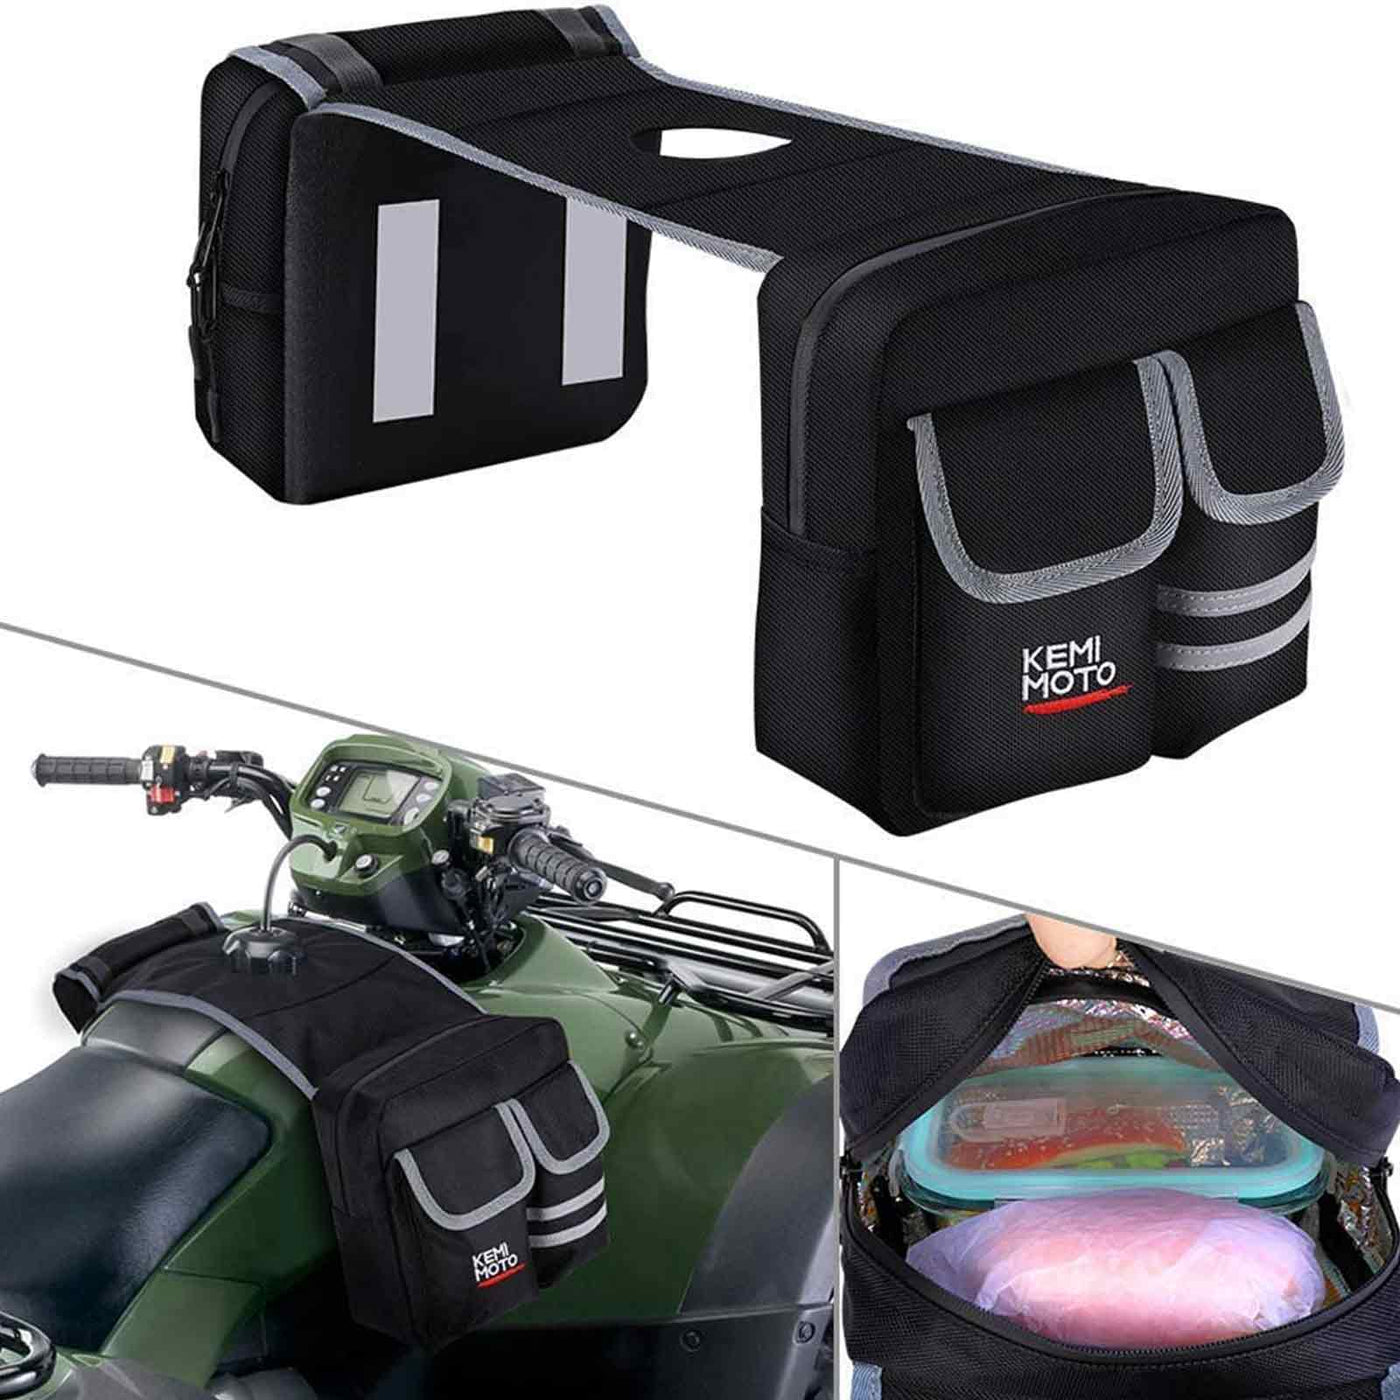 ATV Motorcycles Fuel Tank Bag Saddlebag